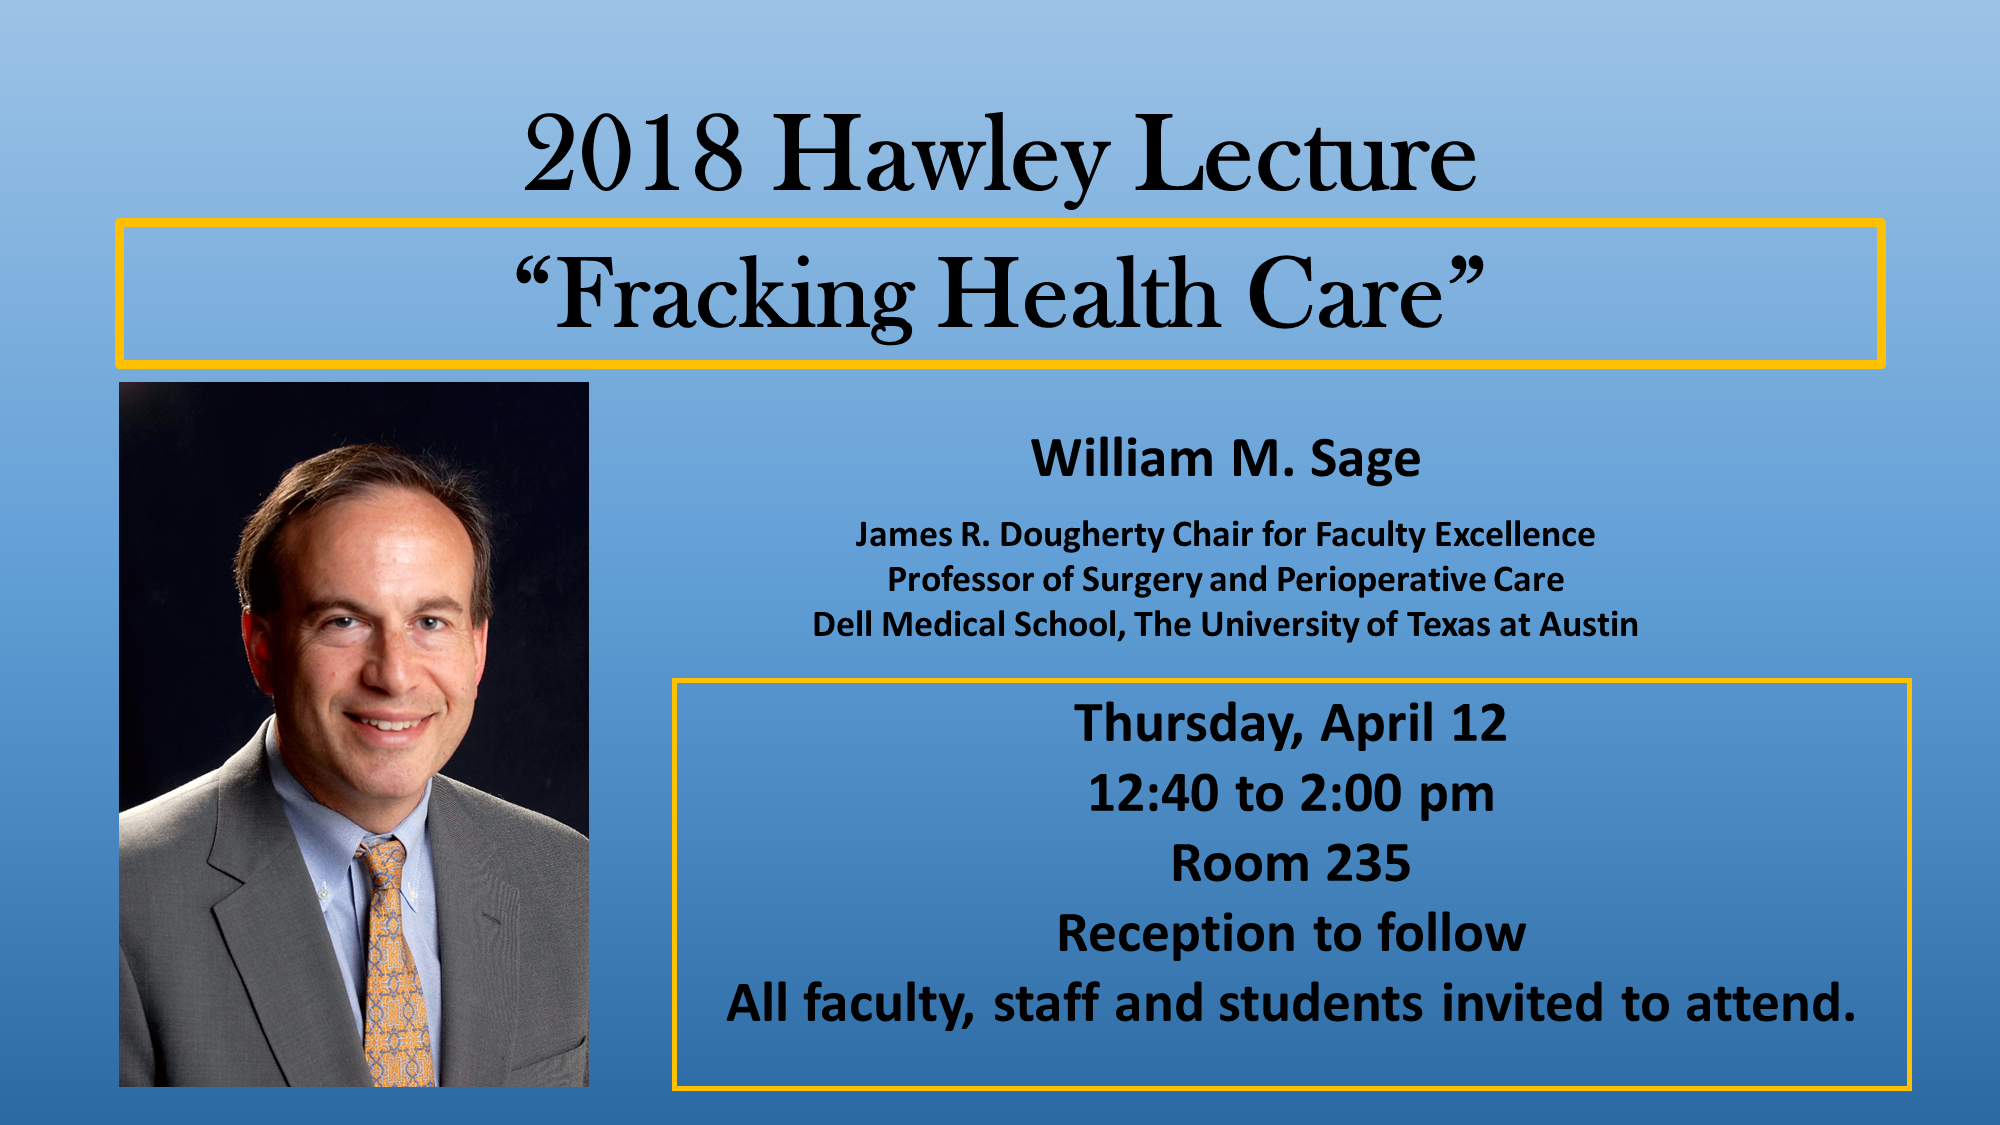 2018 Hawley Lecture: William M. Sage